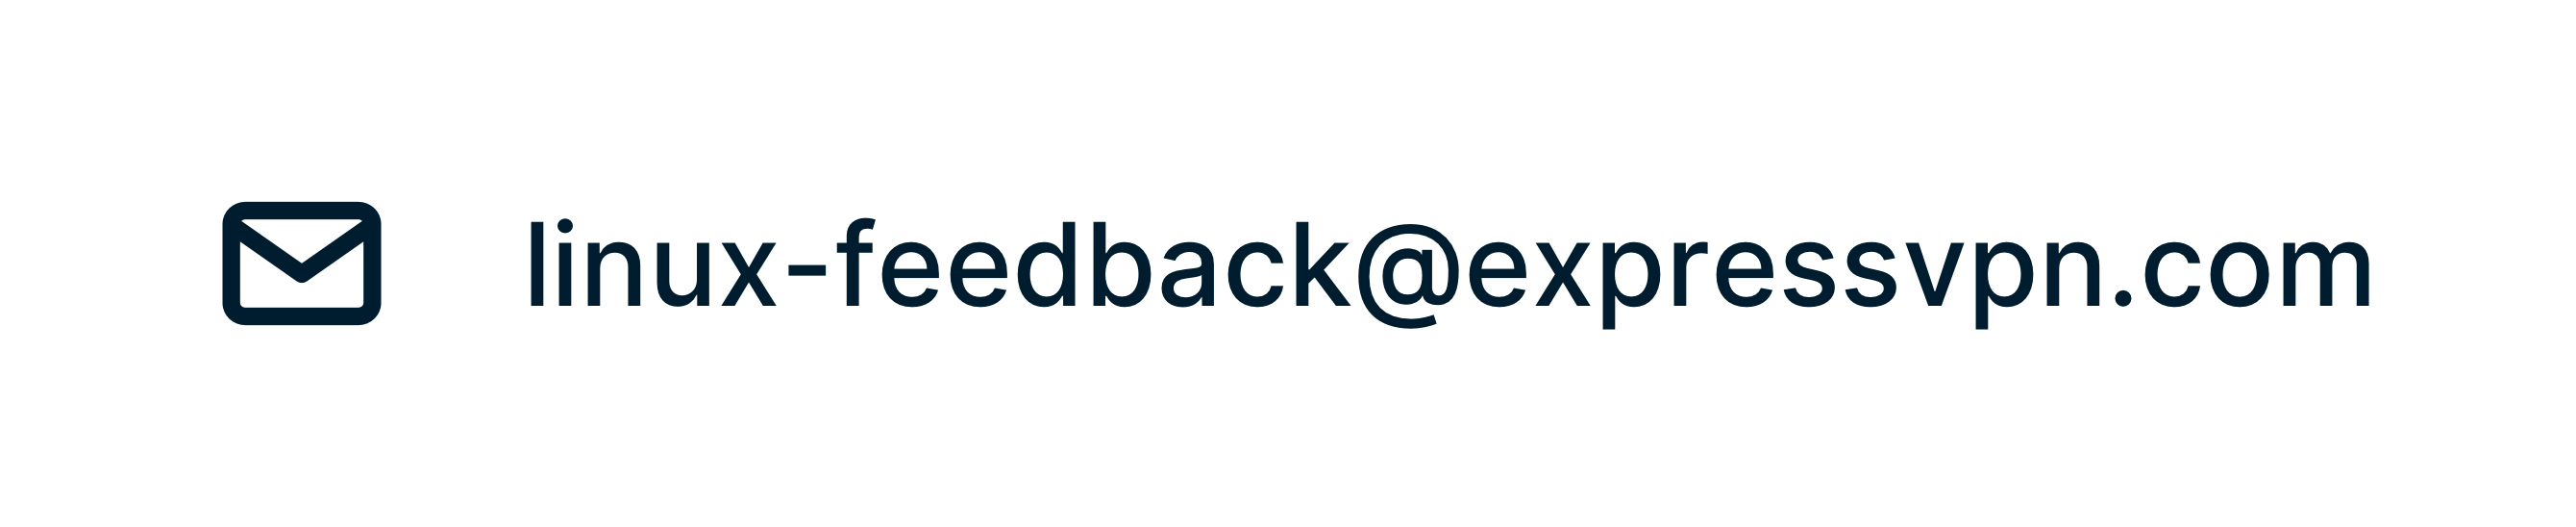 Enviar feedback sobre a ExpressVPN beta para Linux.